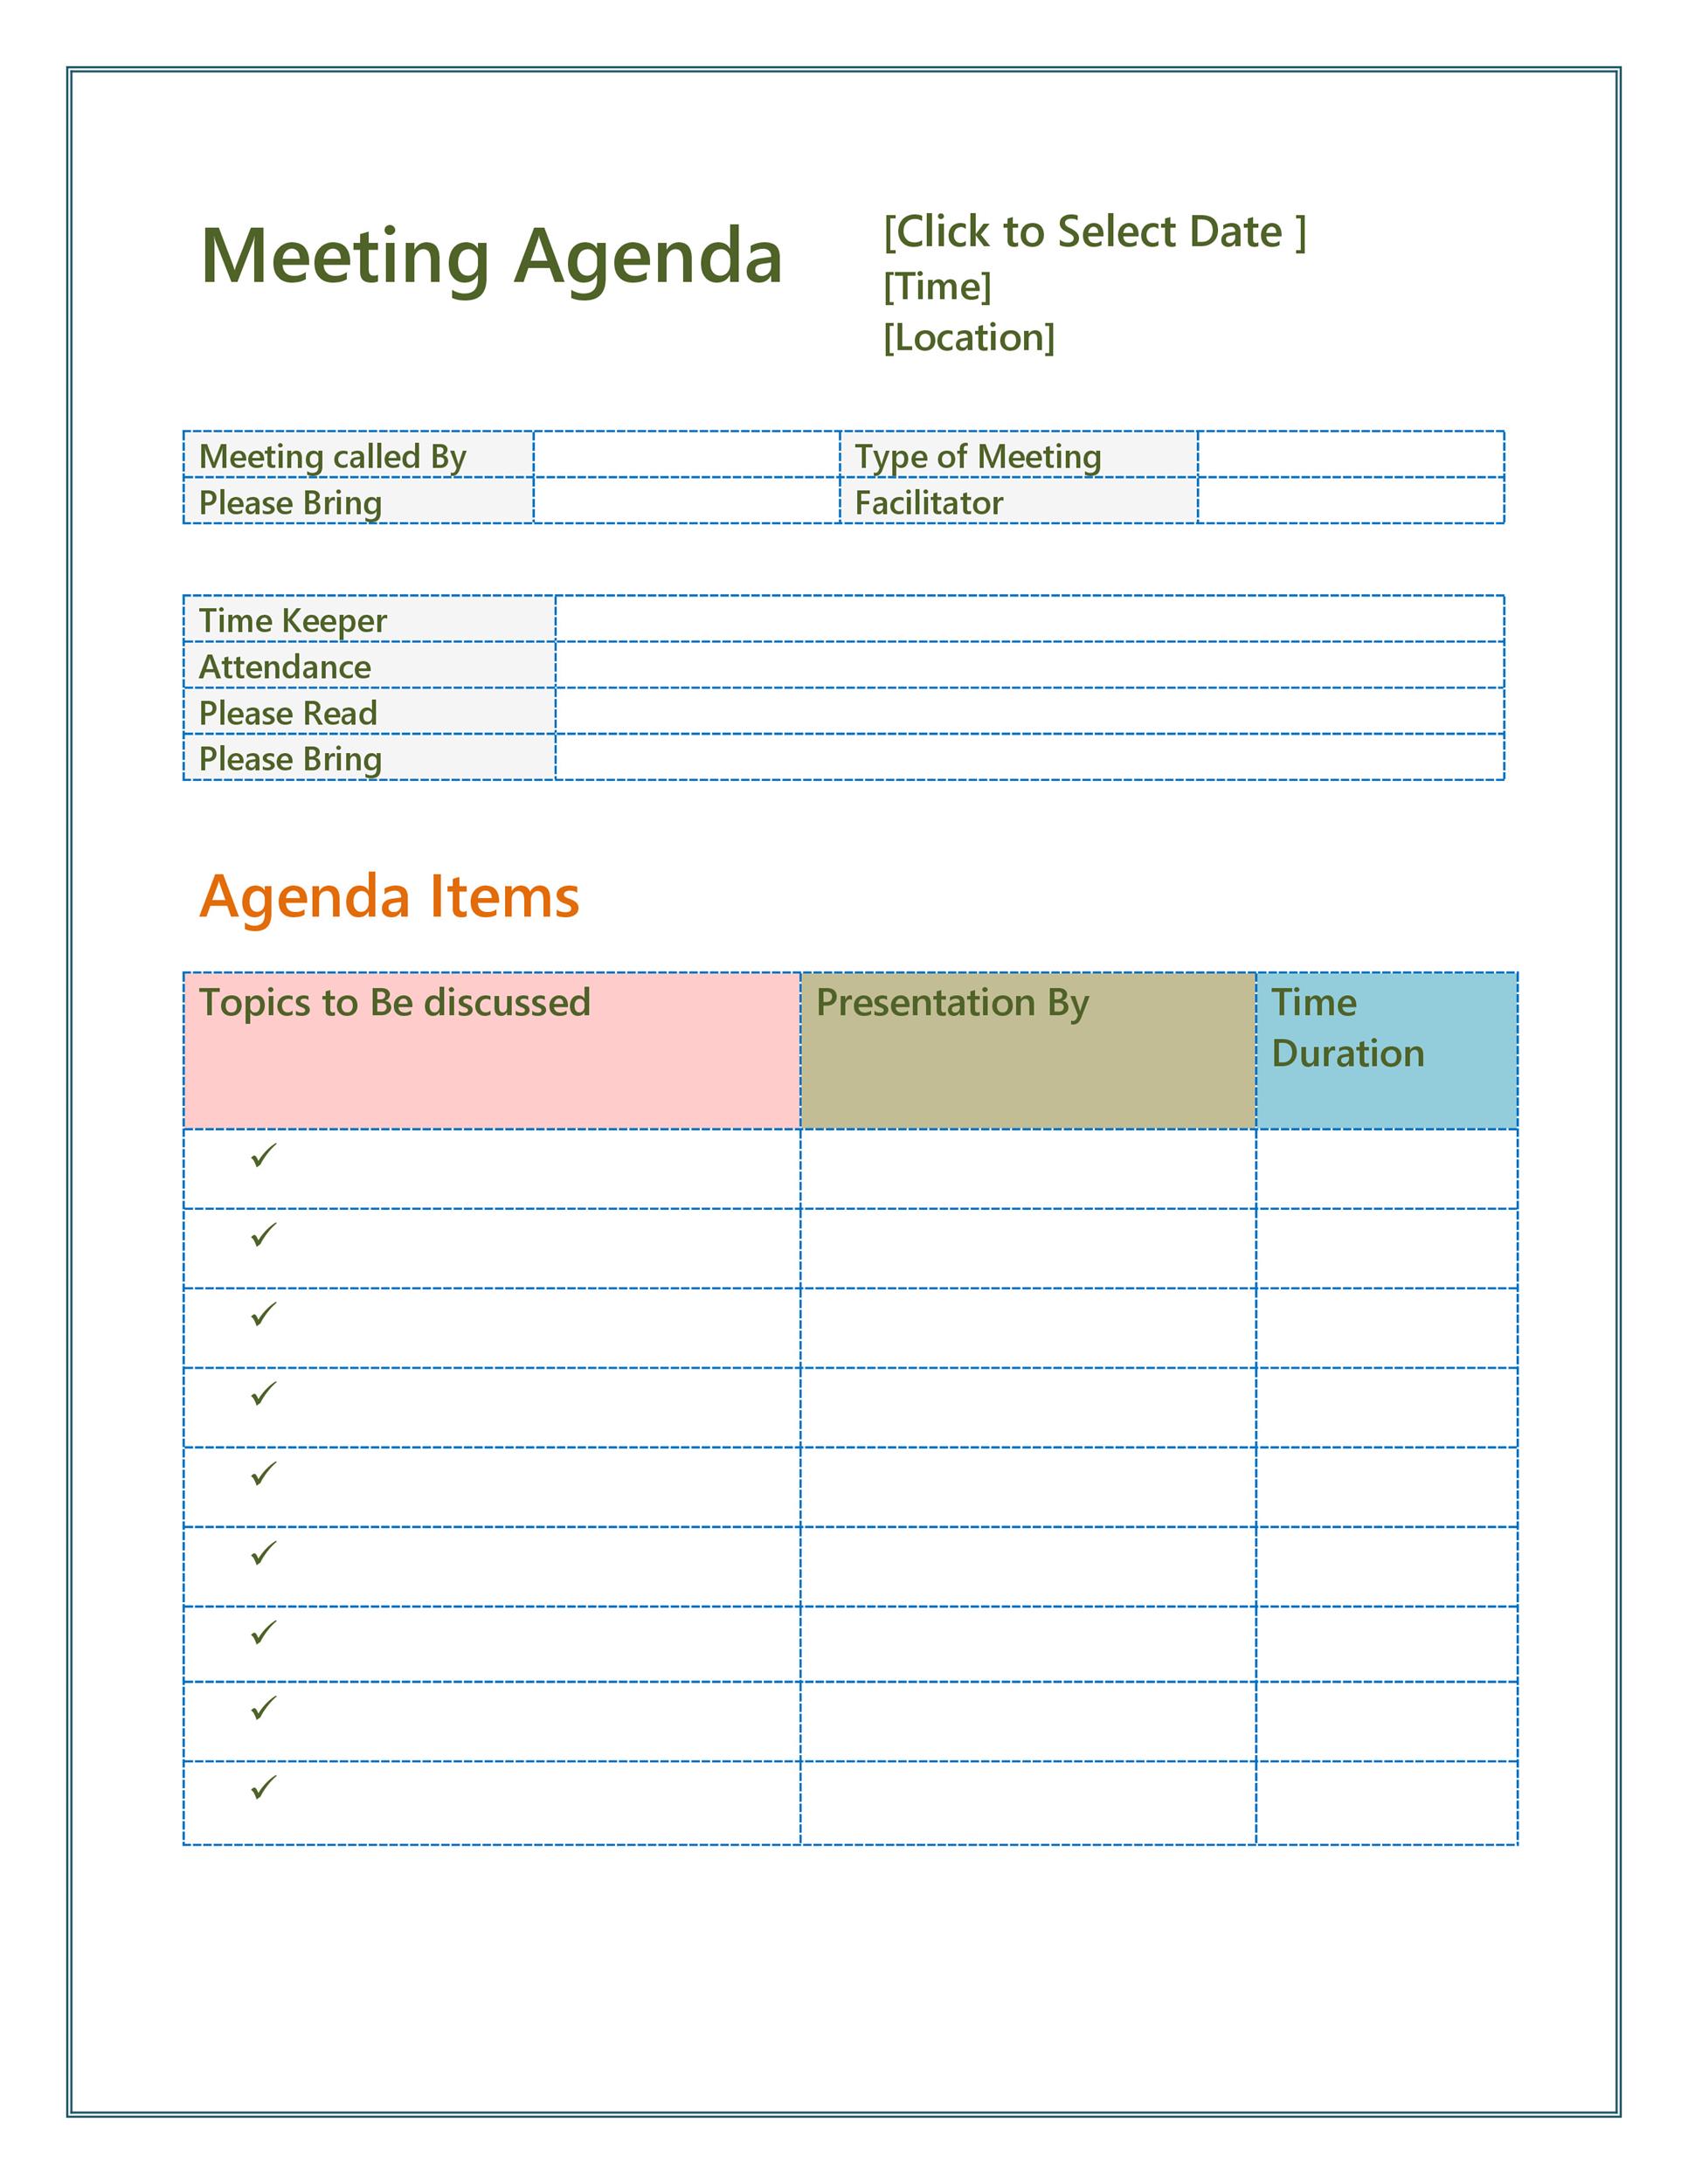 Sales Meeting Agenda Templates